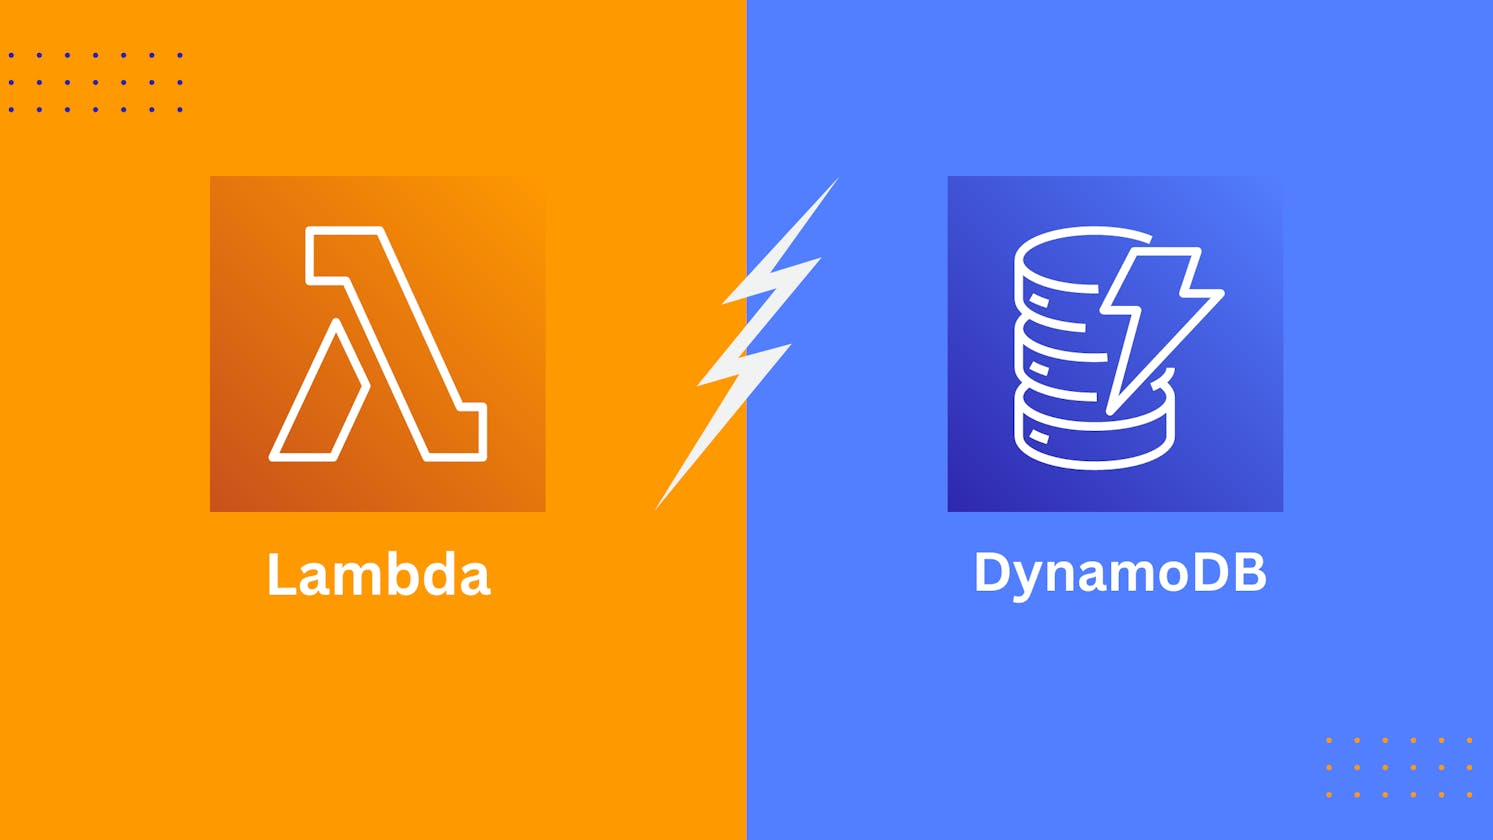 Introduction to DynamoDB and AWS Lambda